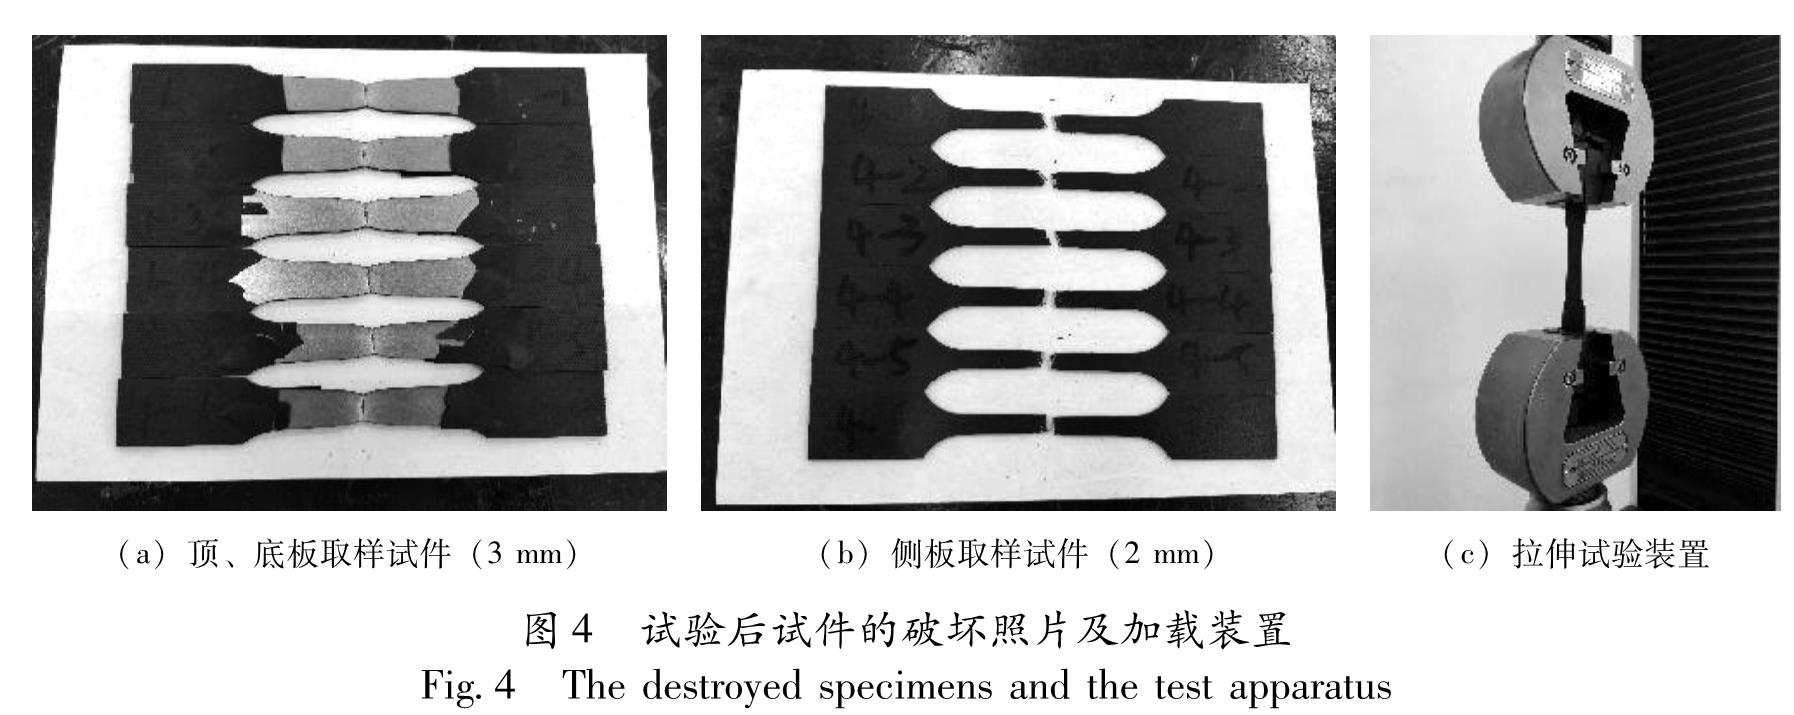 图4 试验后试件的破坏照片及加载装置<br/>Fig.4 The destroyed specimens and the test apparatus